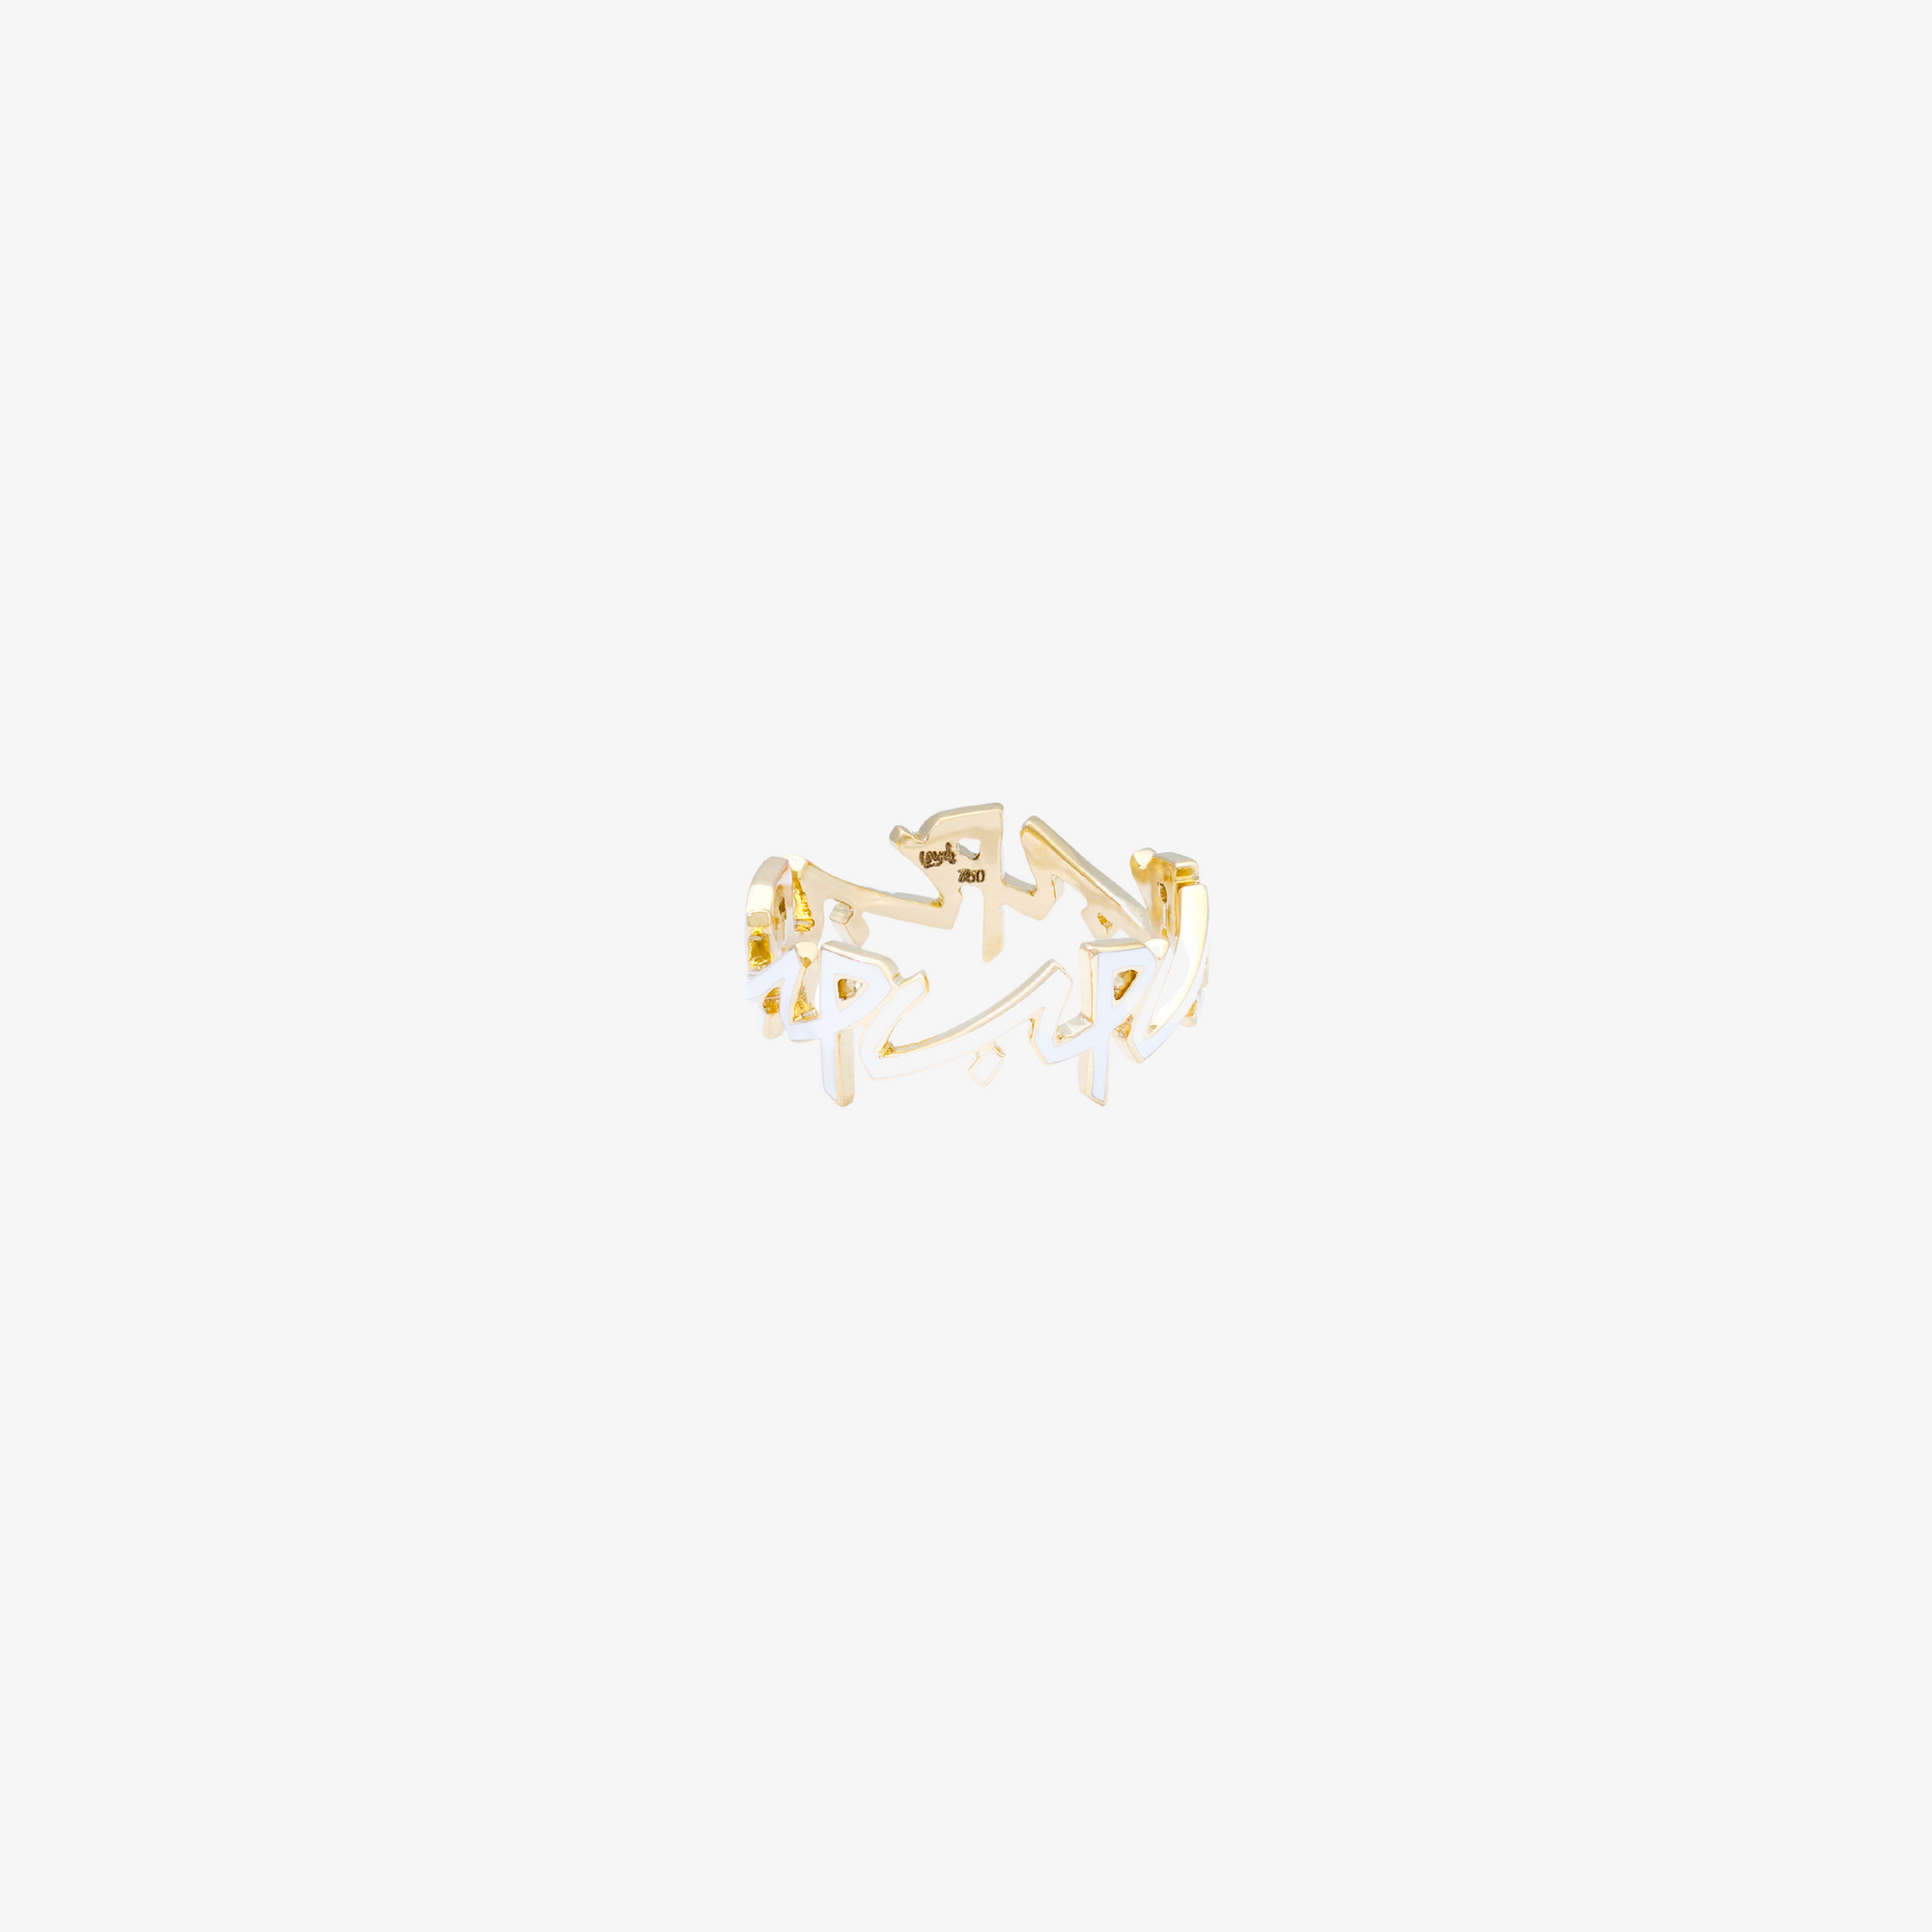 OULA - 18K Gold "Love" Ring